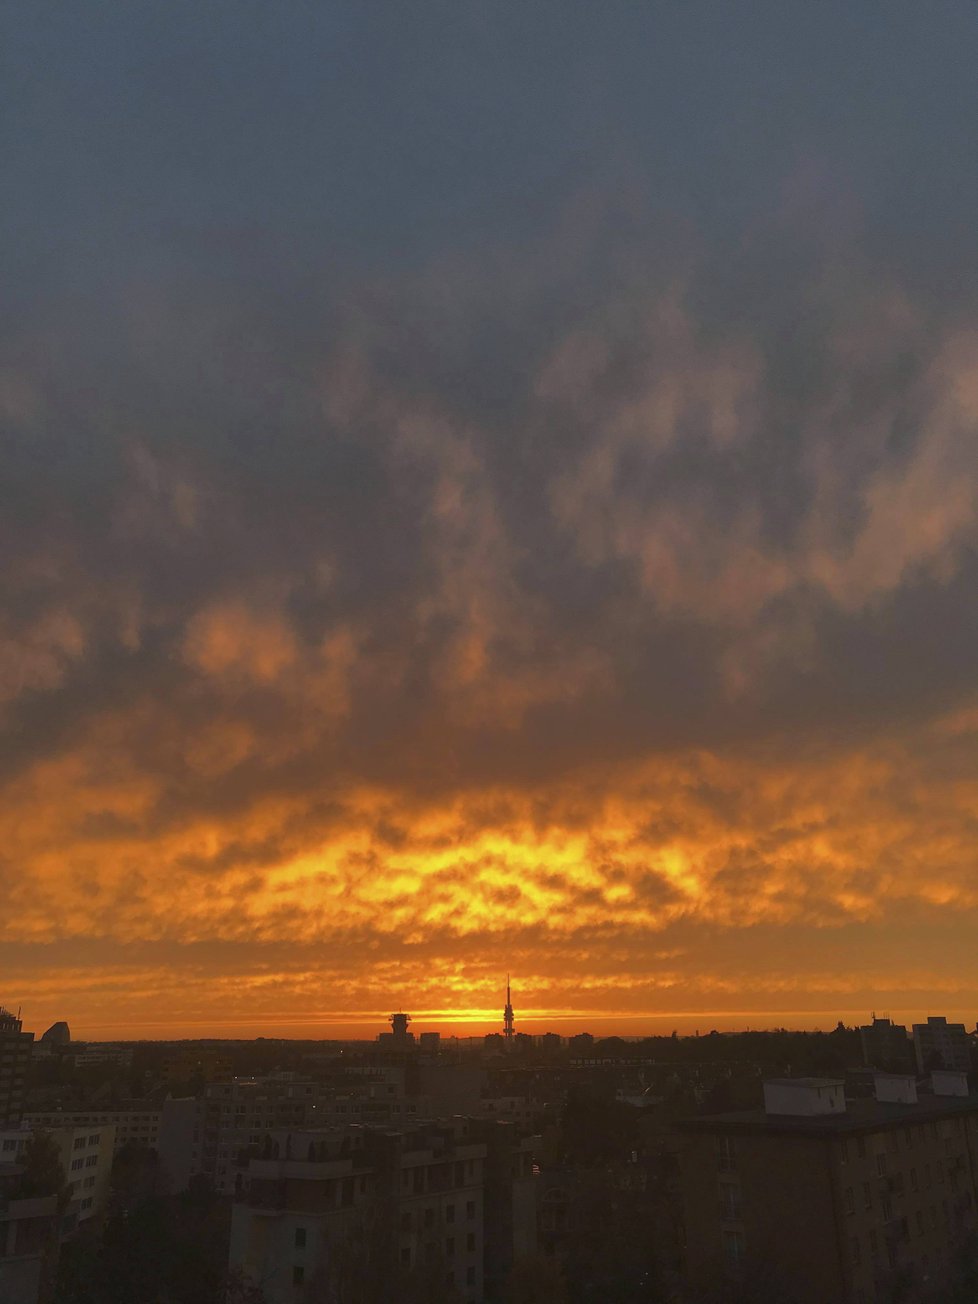 Z Chmelnice nafotila čtenářka celý západ slunce nad Žižkovem. Listopad 2018.